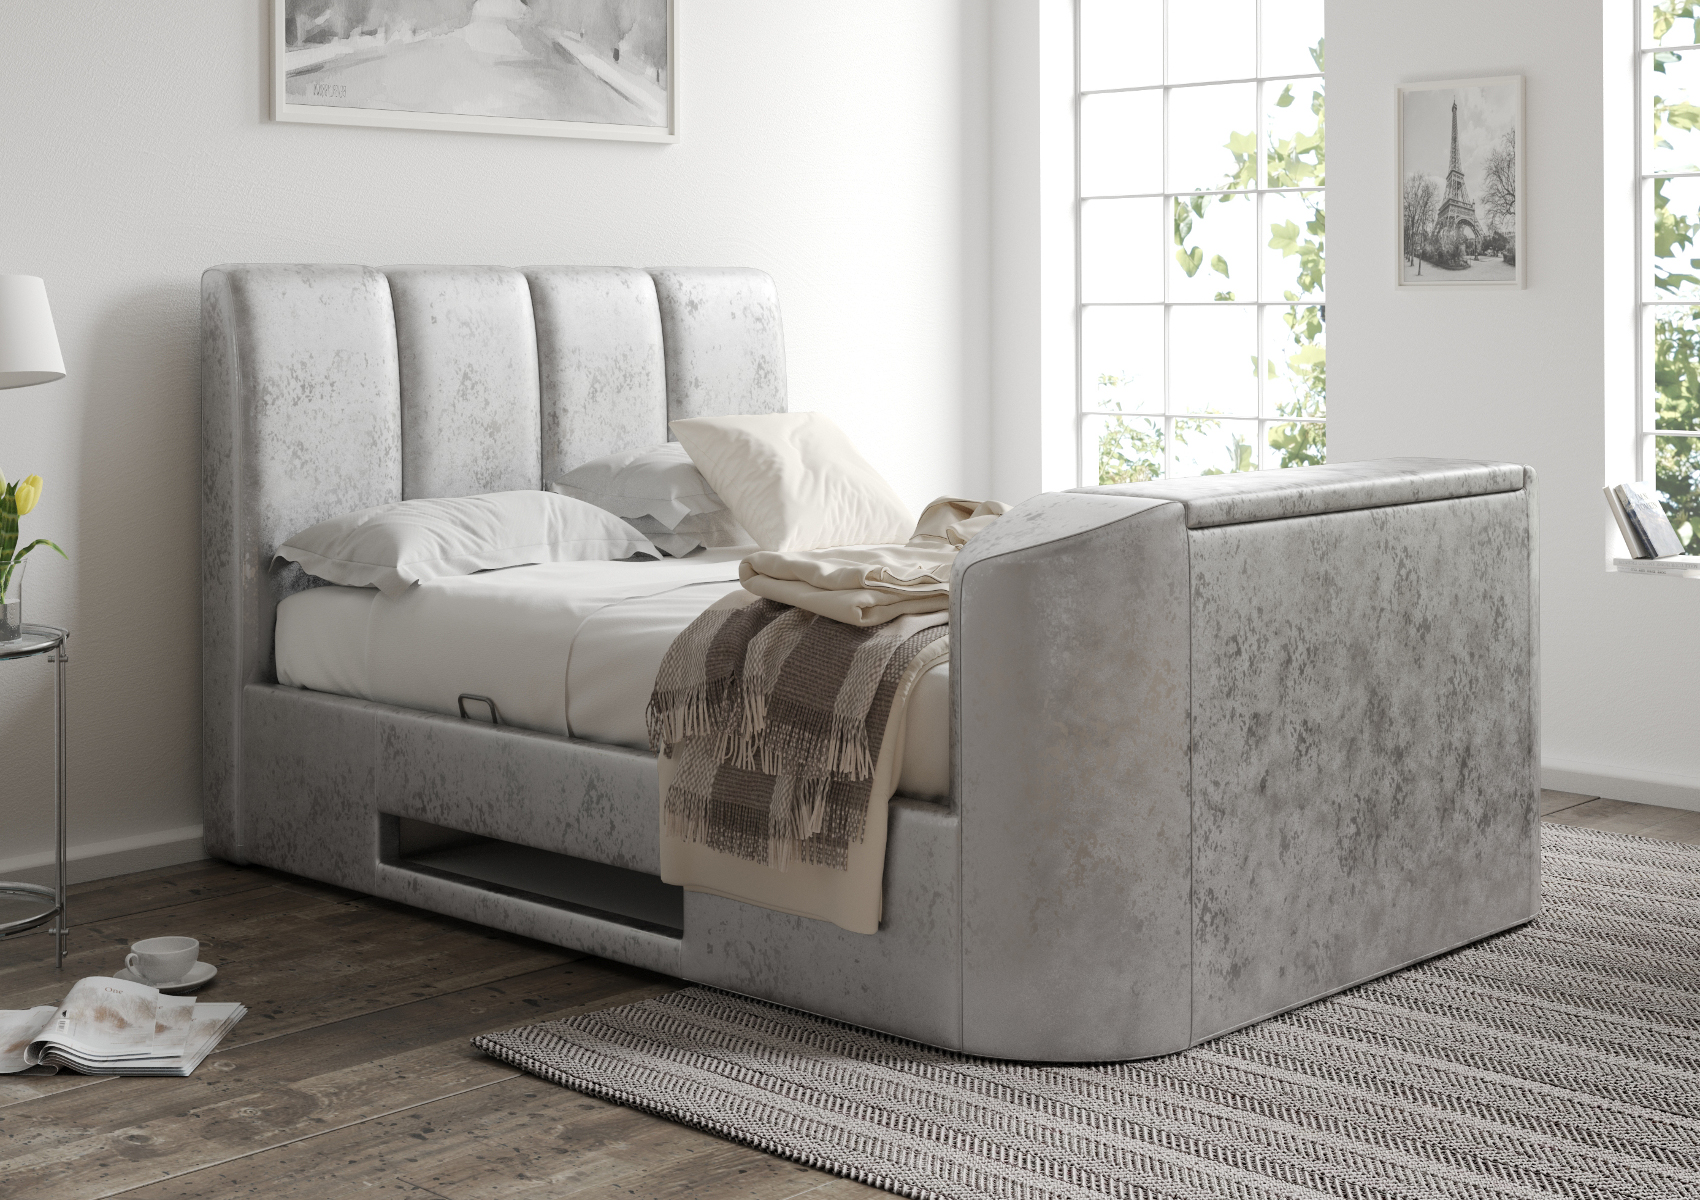 View Copenhagen Upholstered Multifunctional Ottoman Smart TV Bed Frame Silver Crush Time4Sleep information